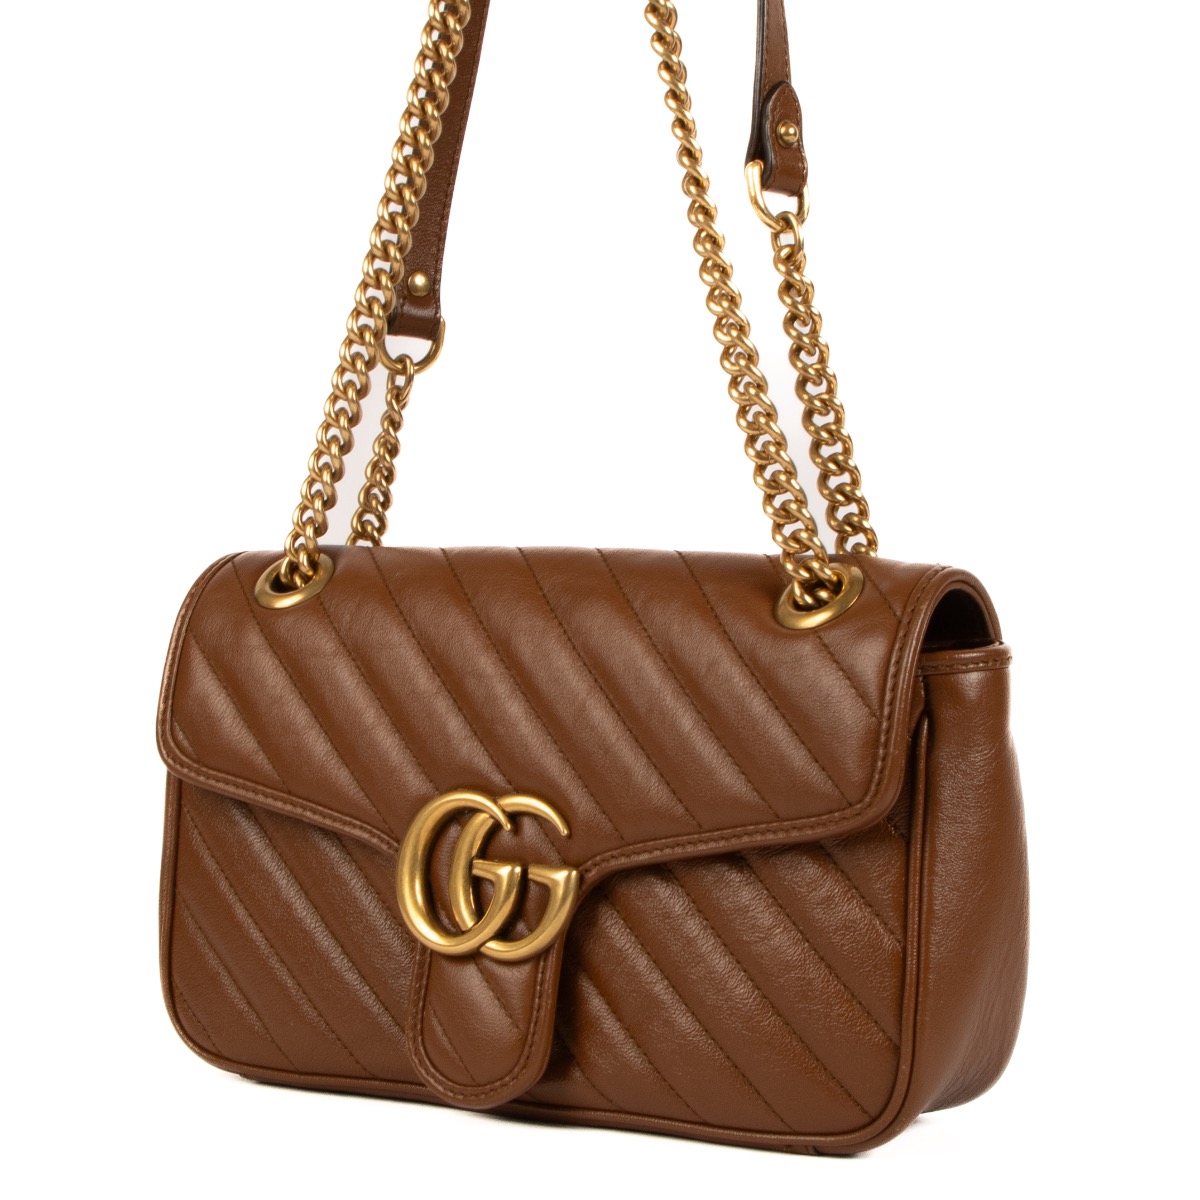 Gucci Bags in Designer Bags - Walmart.com